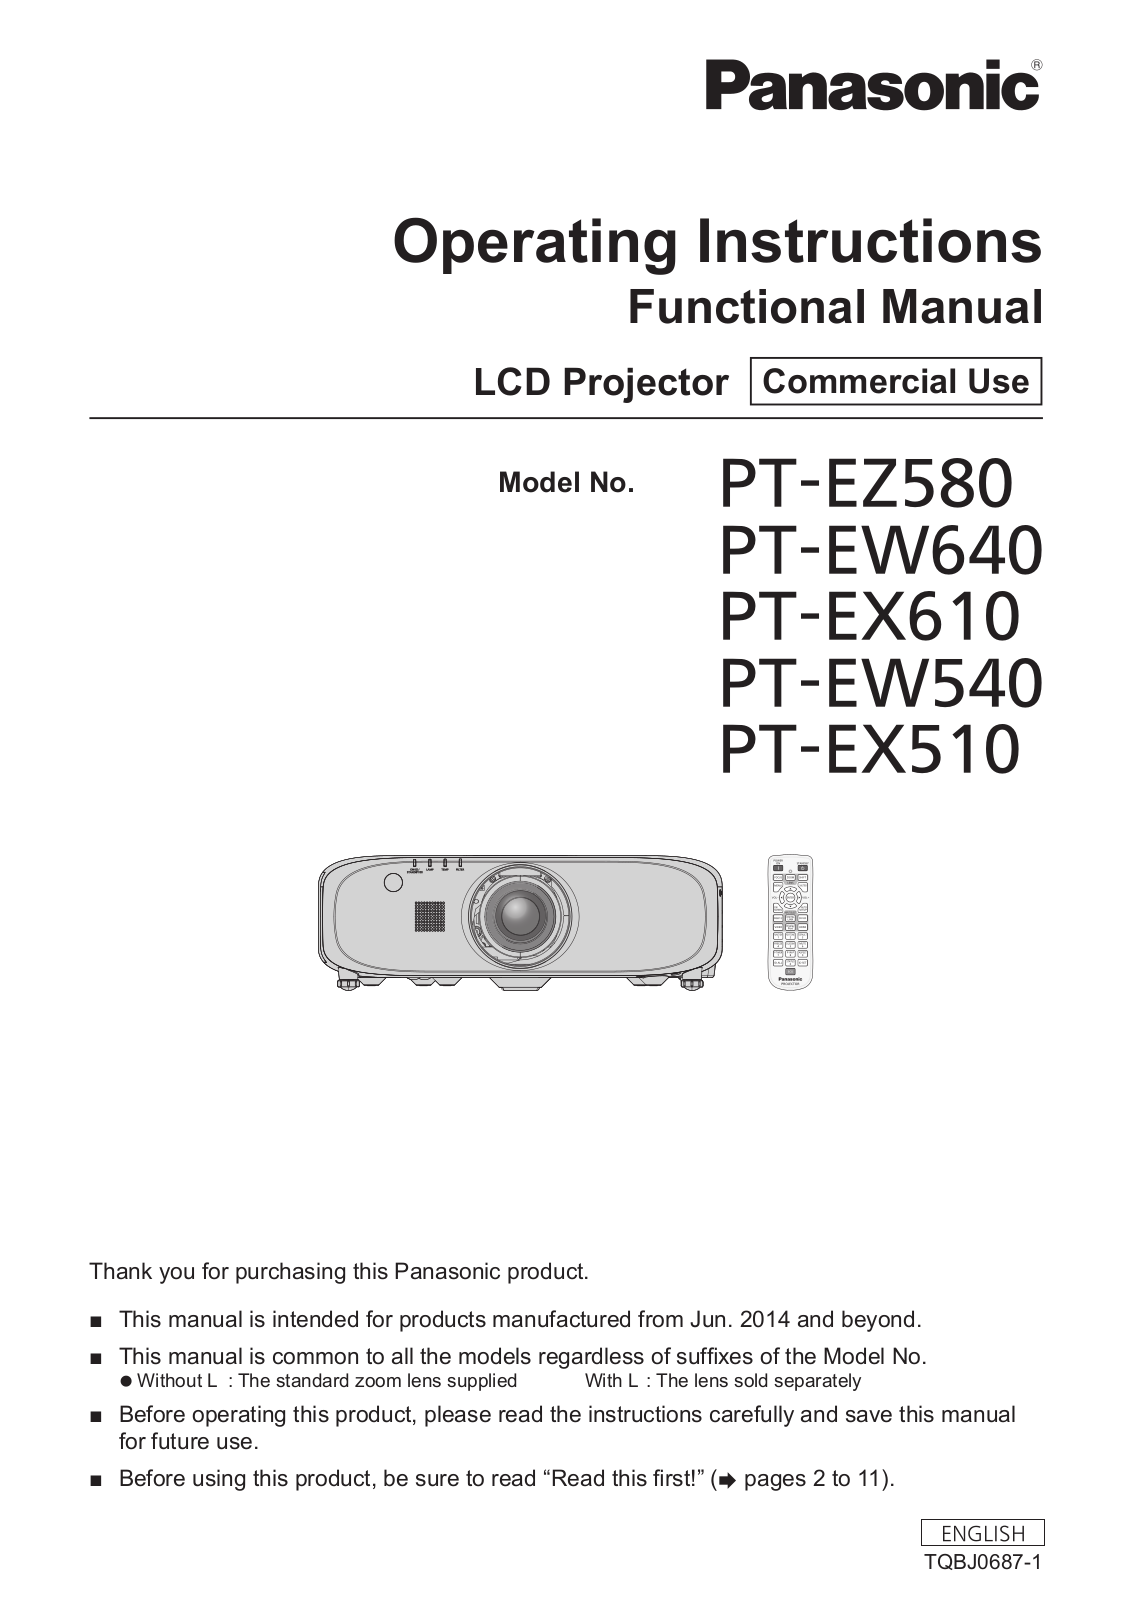 Panasonic PT-EW540, PT-EW640, PT-EX510, PT-EX610, PT-EZ580 Operating Instruction